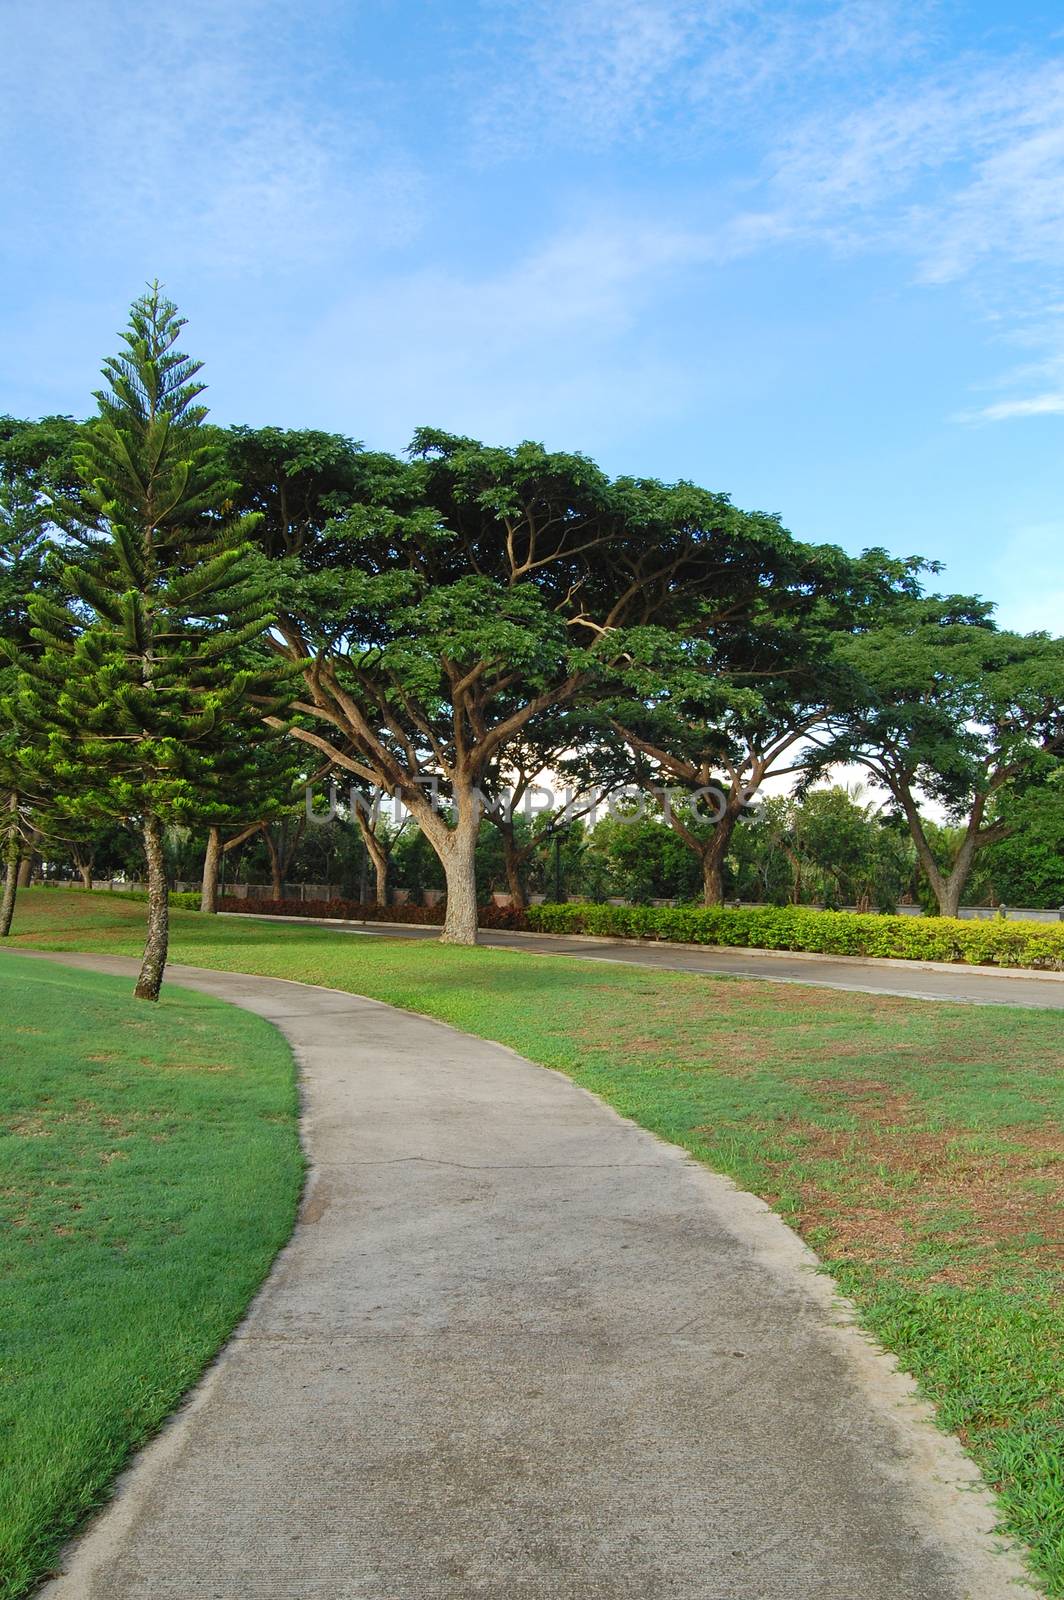 Golf course pathway at Mount Malarayat in Lipa, Batangas, Philip by imwaltersy